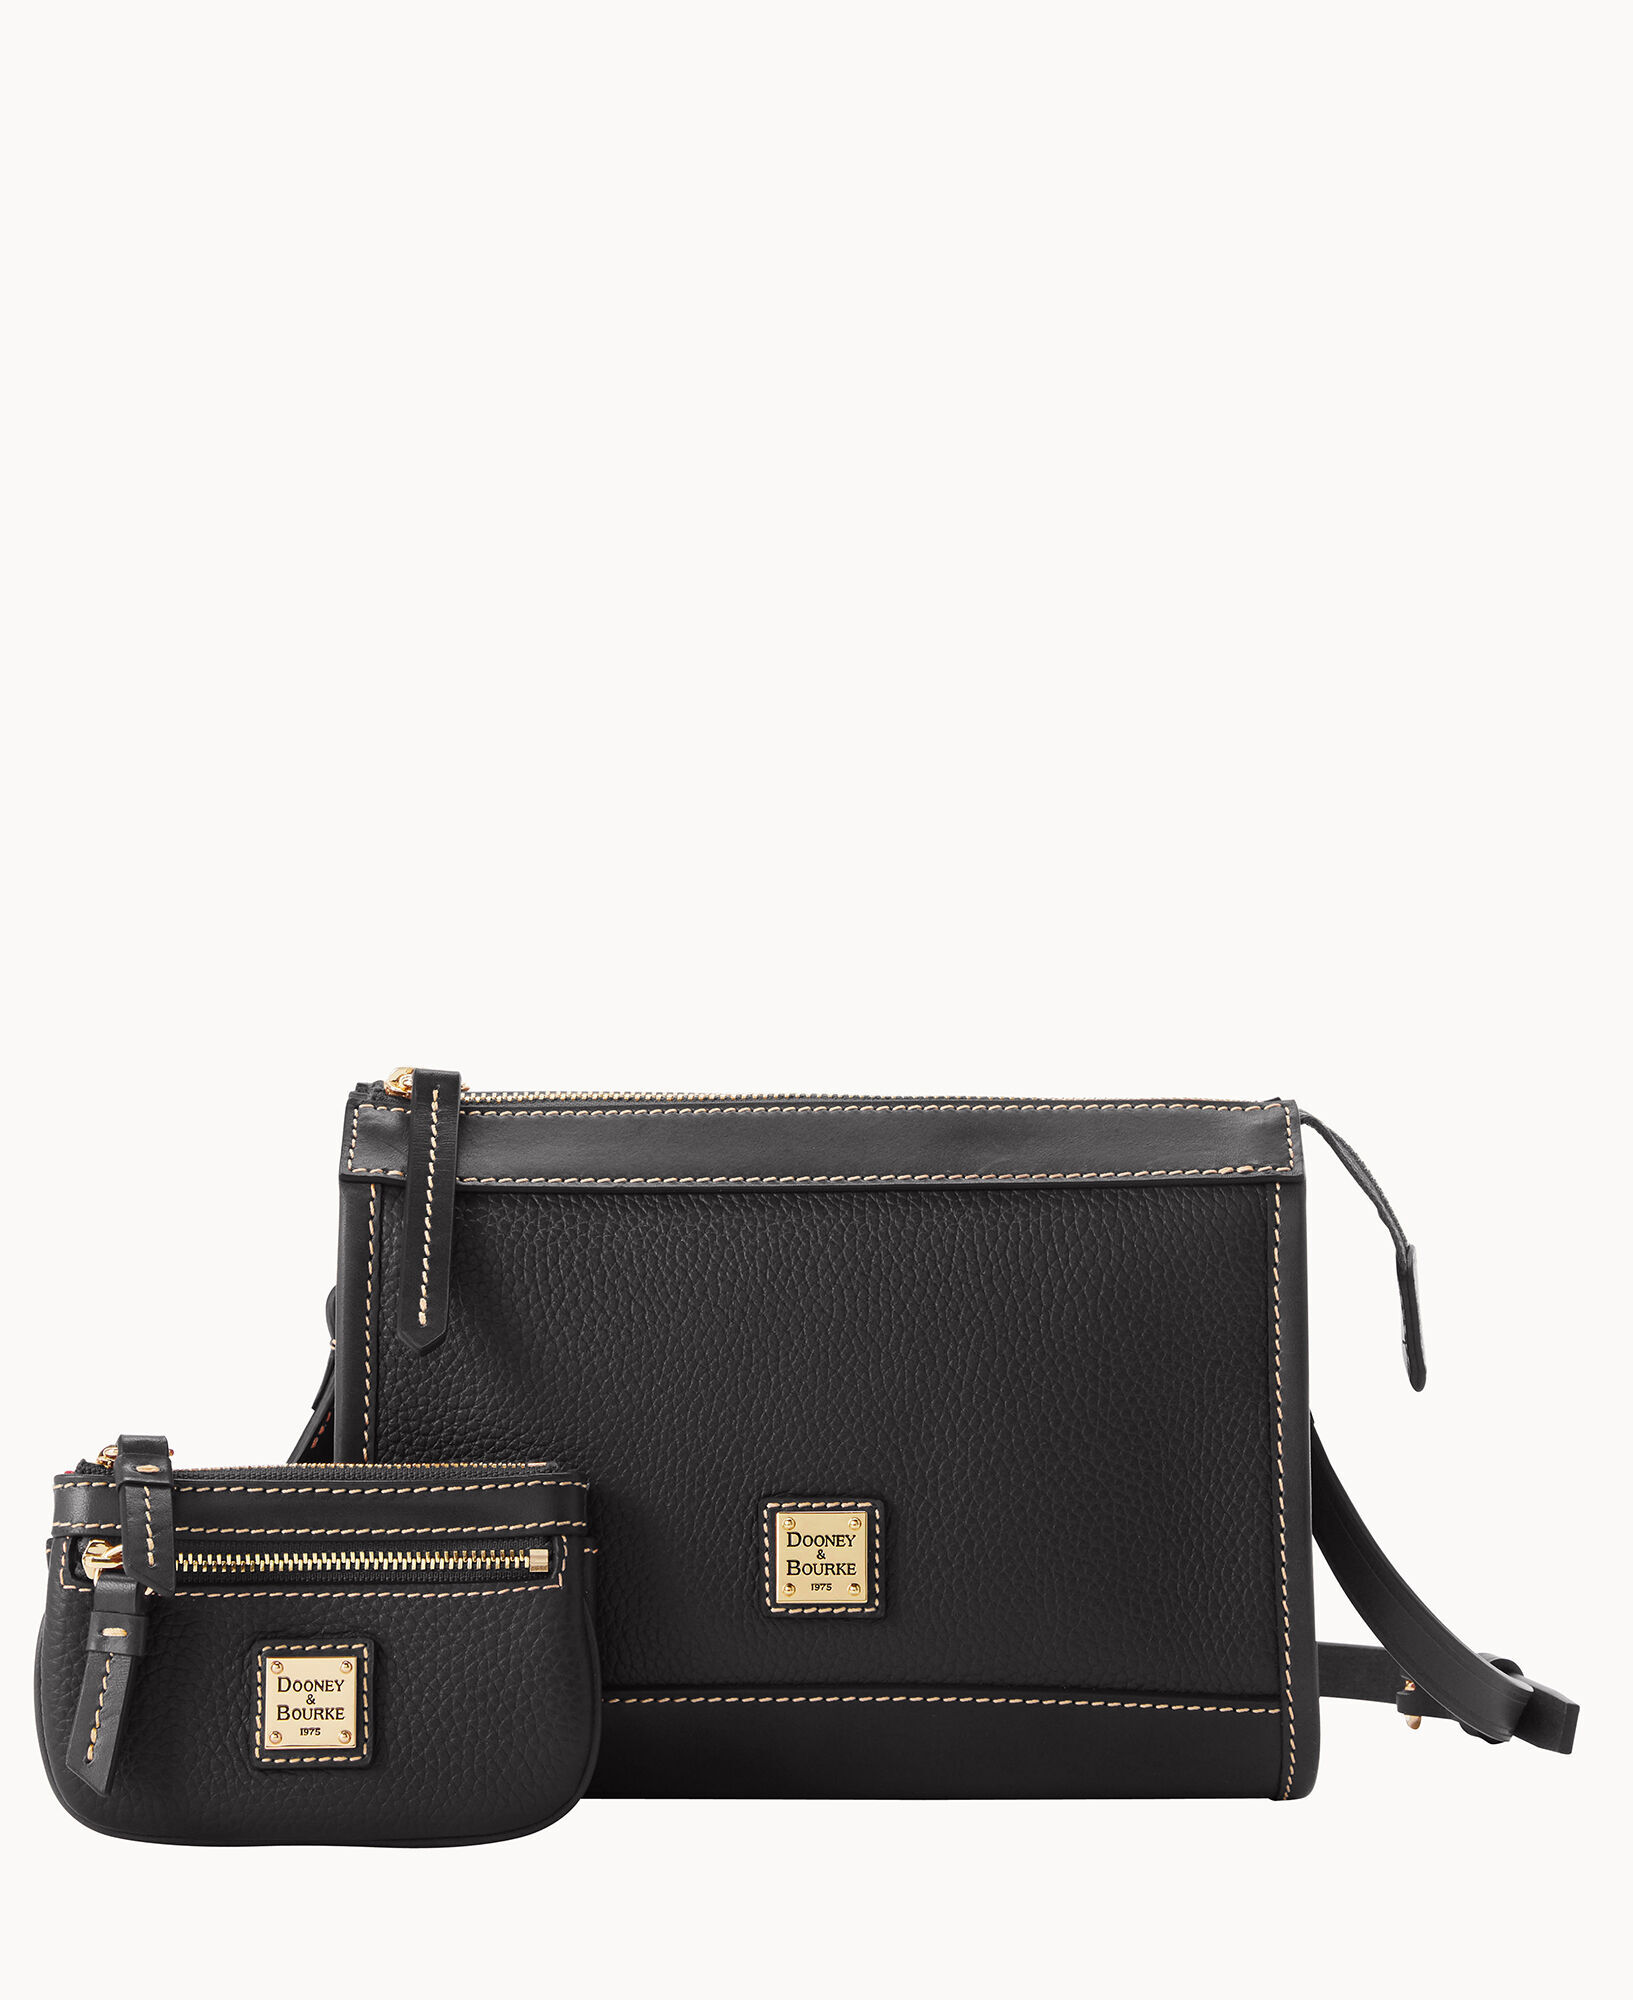 DOONEY & BOURKE LEXI Black Saffiano Leather Small Adjustable